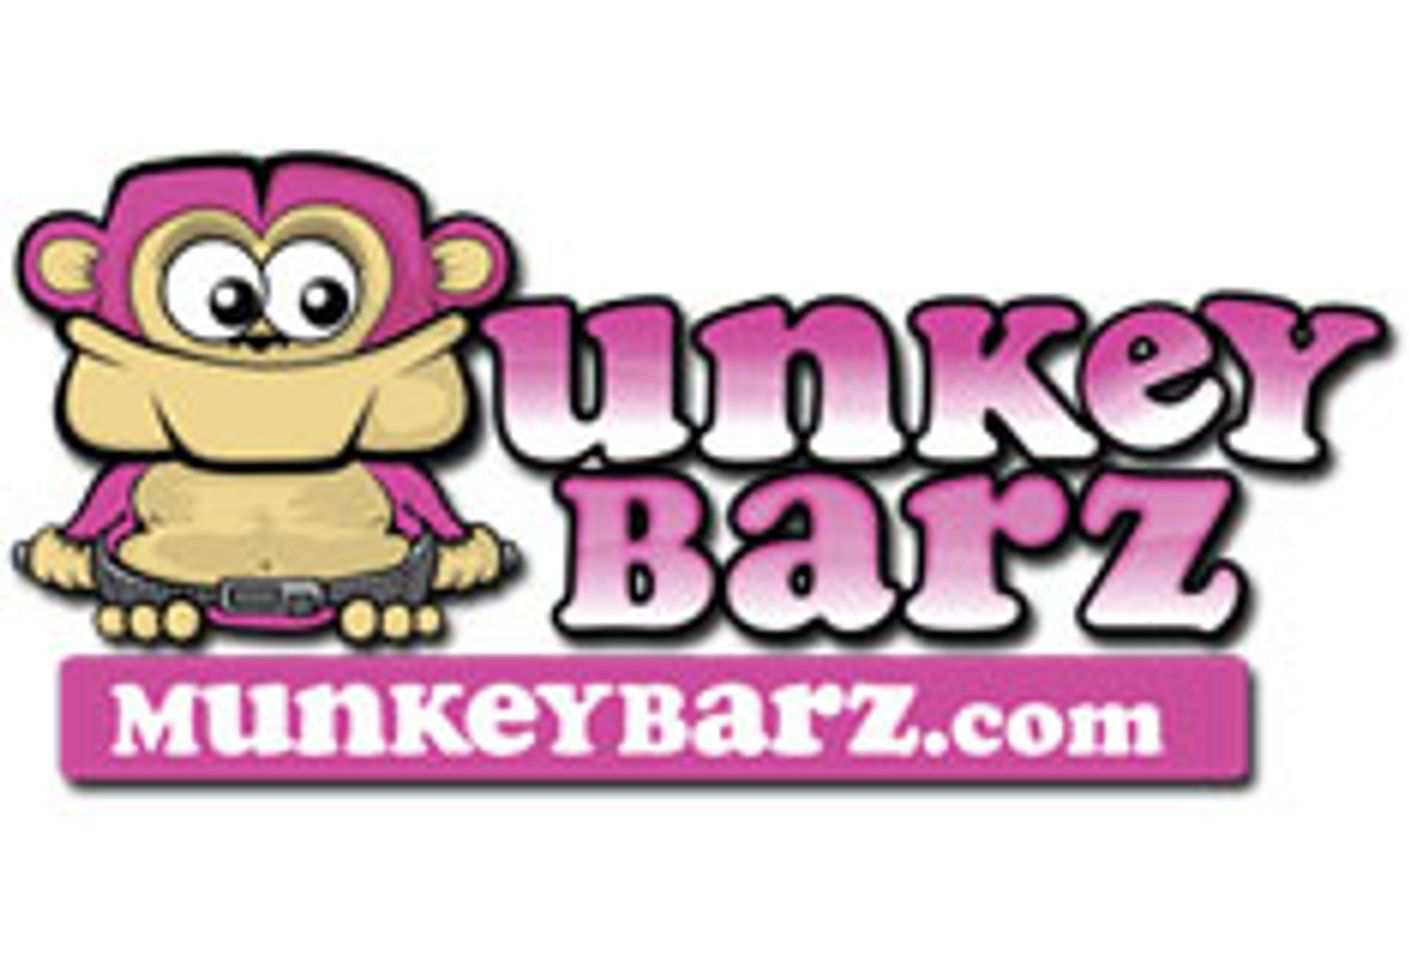 Munkey Barz Lowers Retail Prices